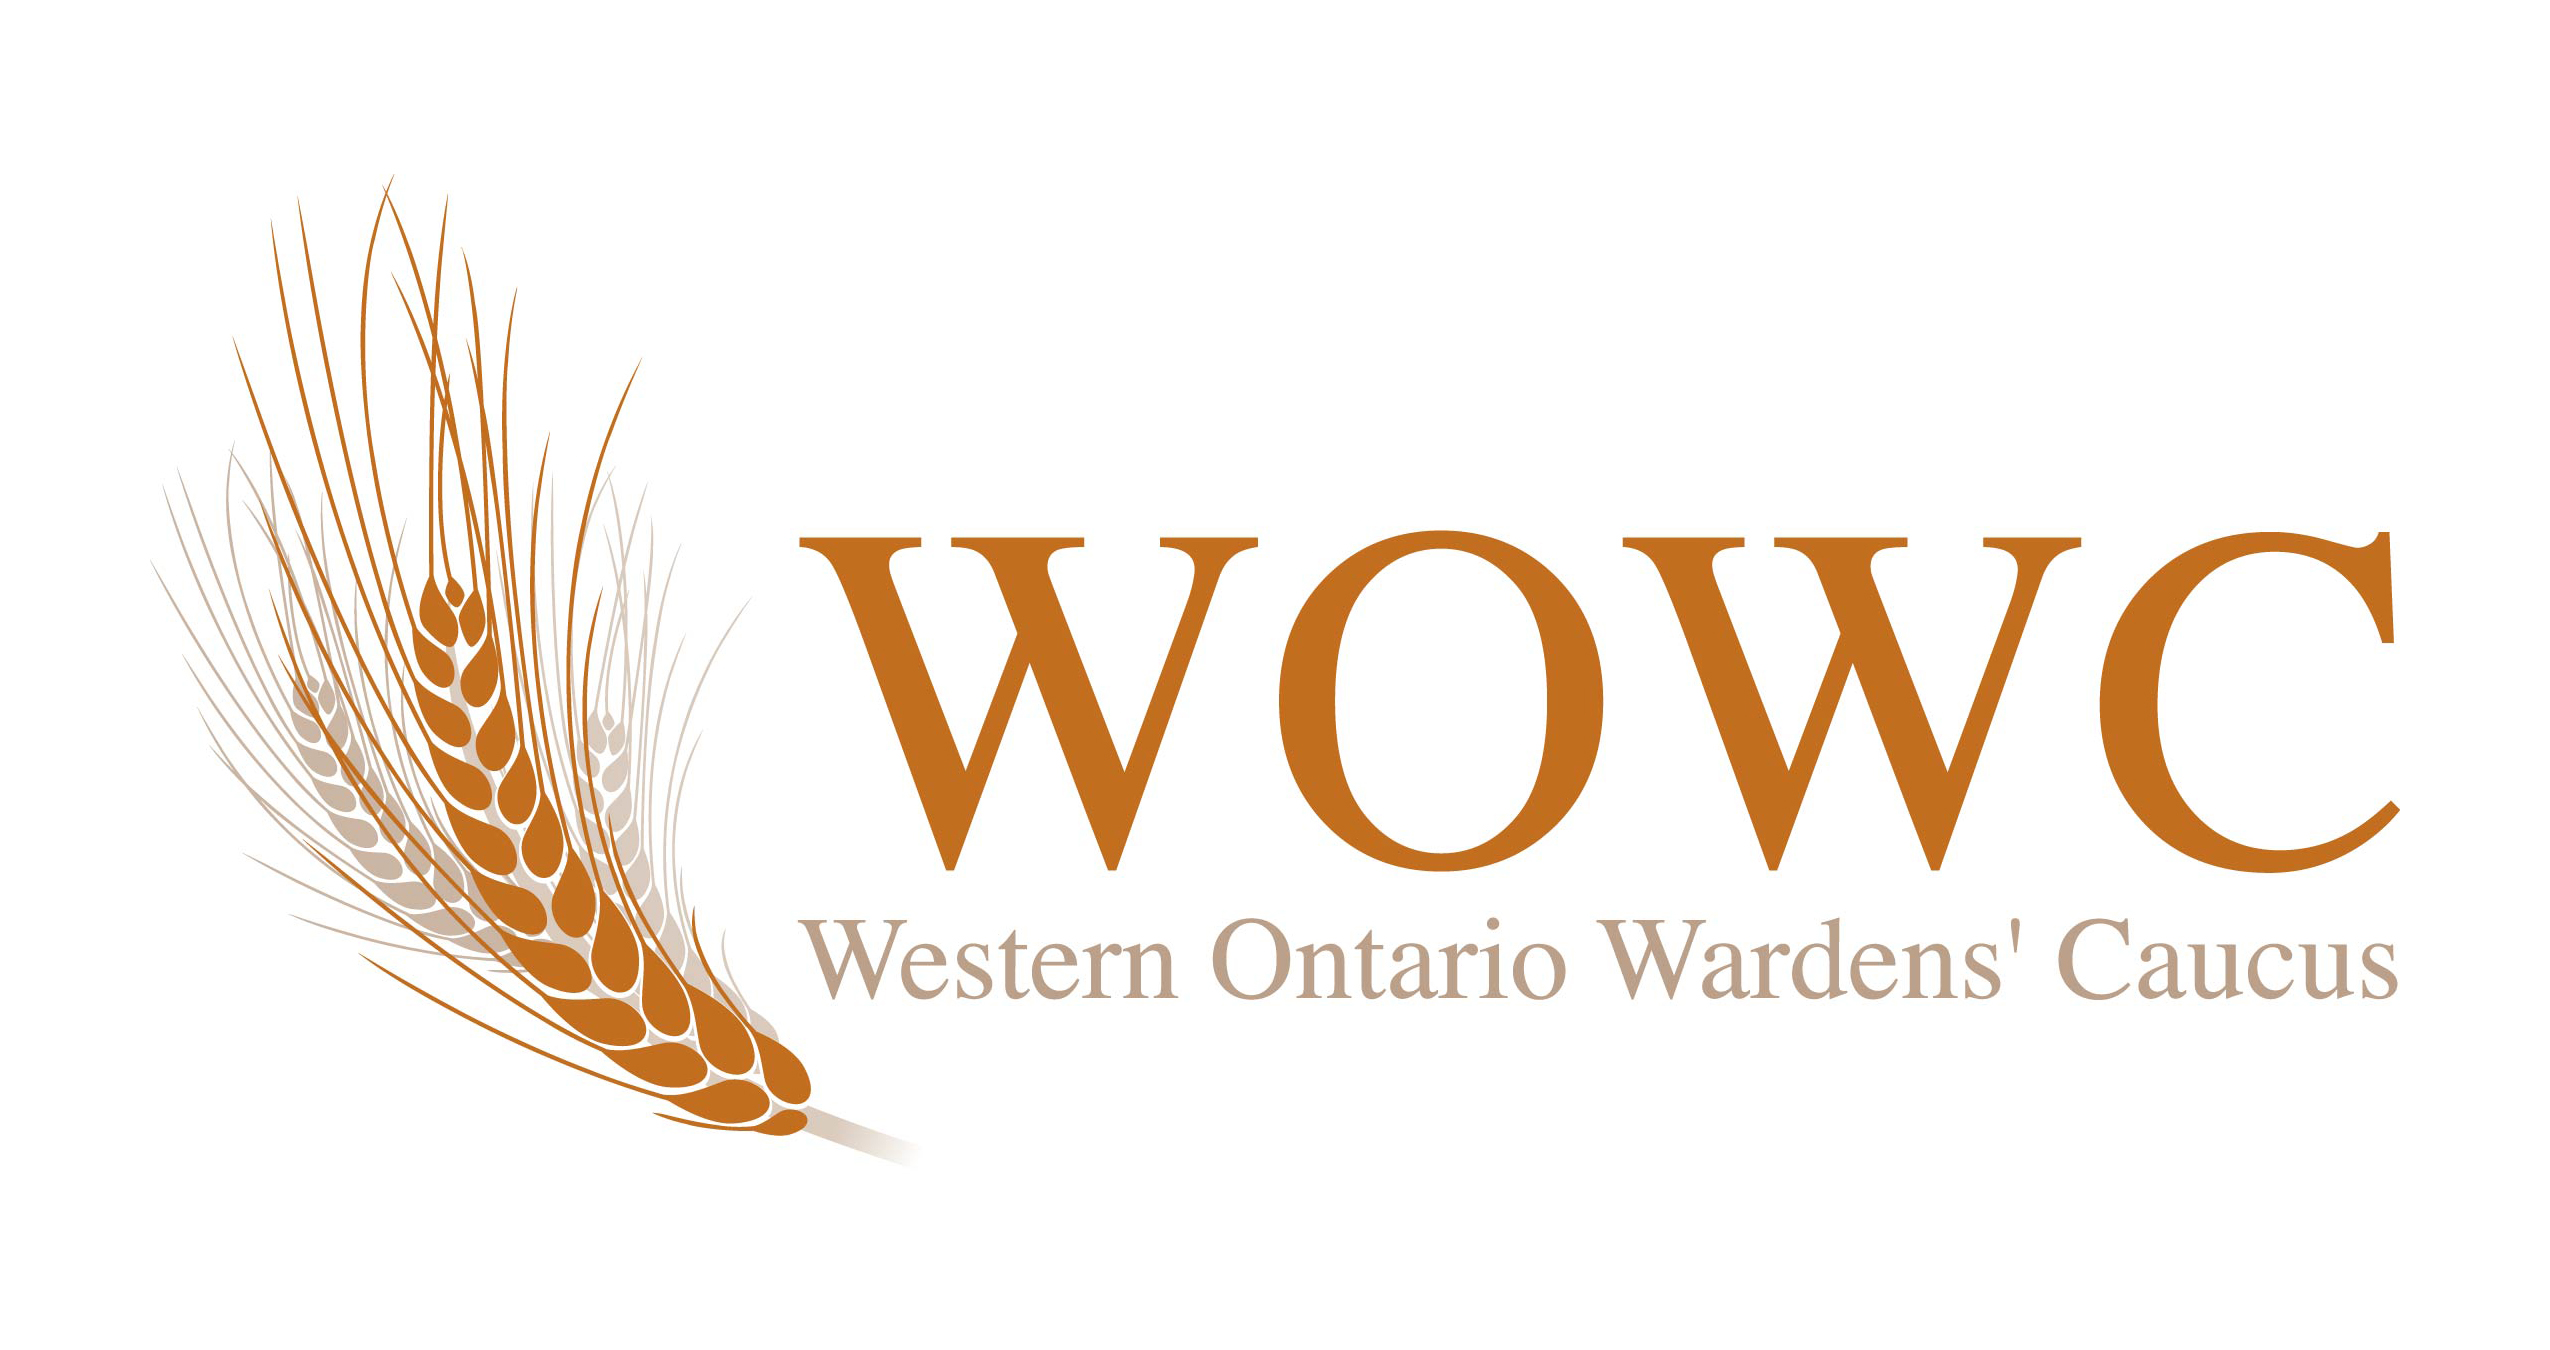 Western Ontario wardens' caucus logo